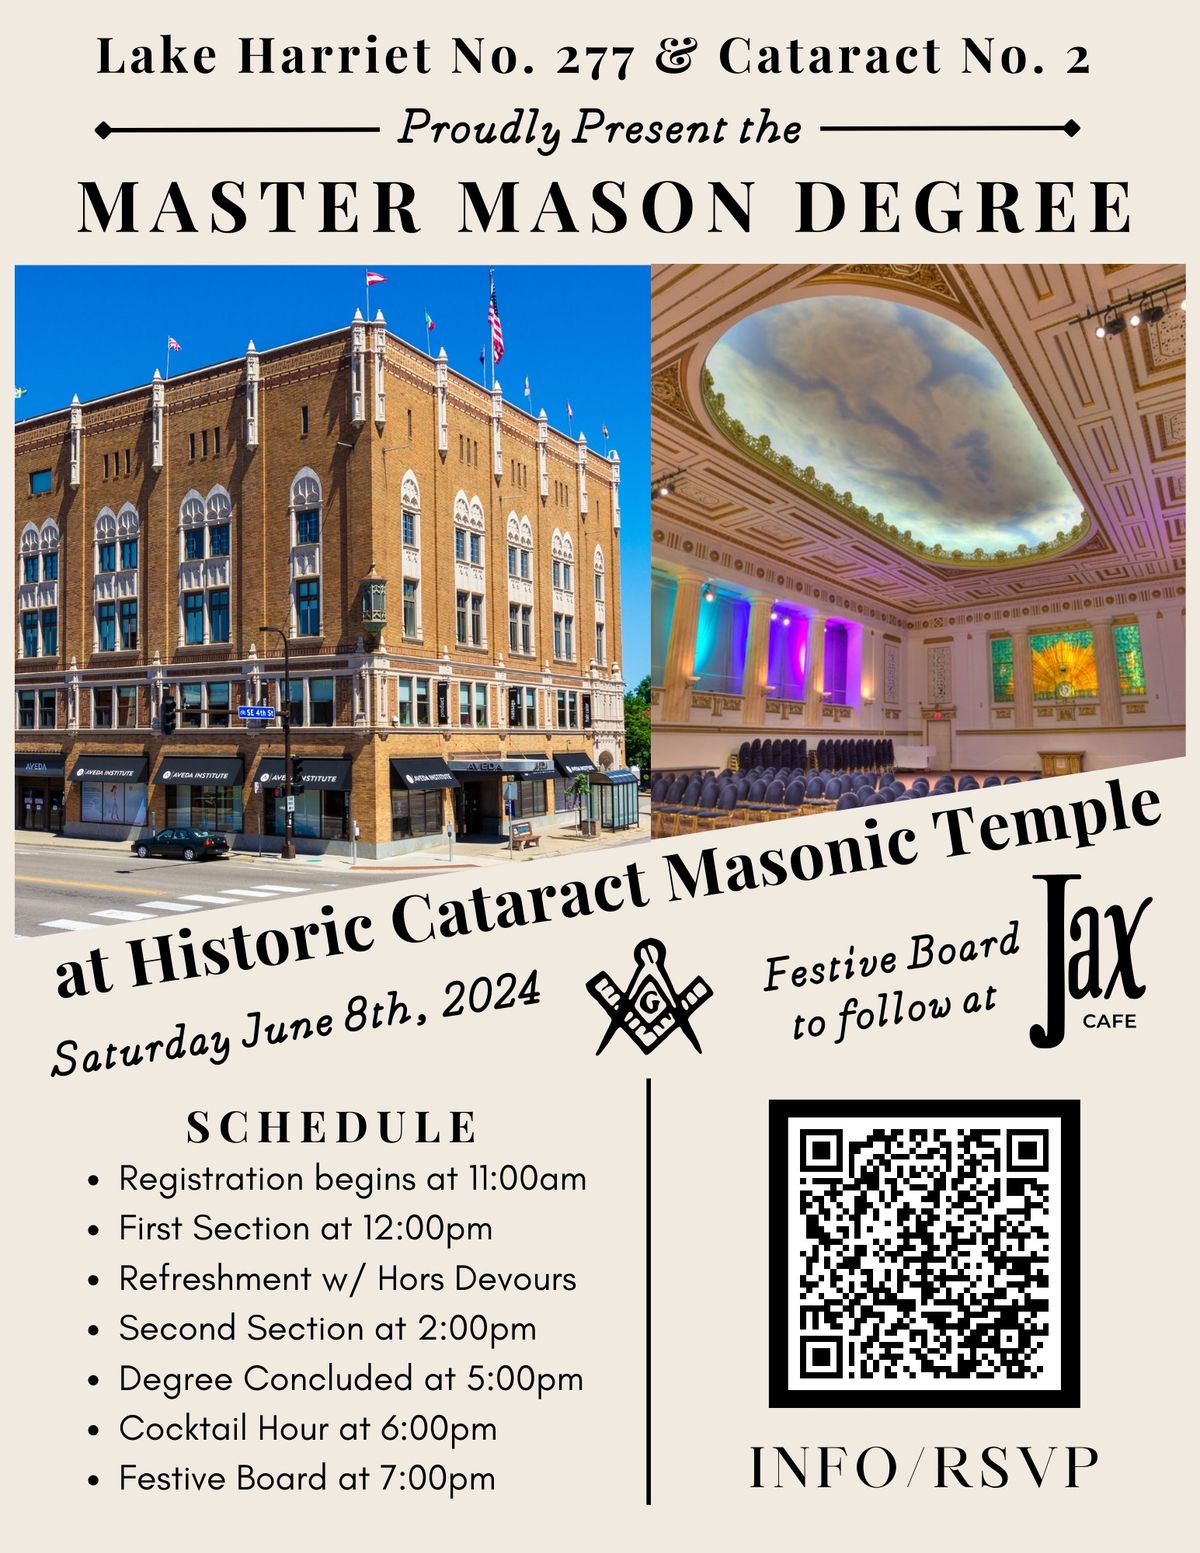 Master Mason Degree at Historic Cataract Temple